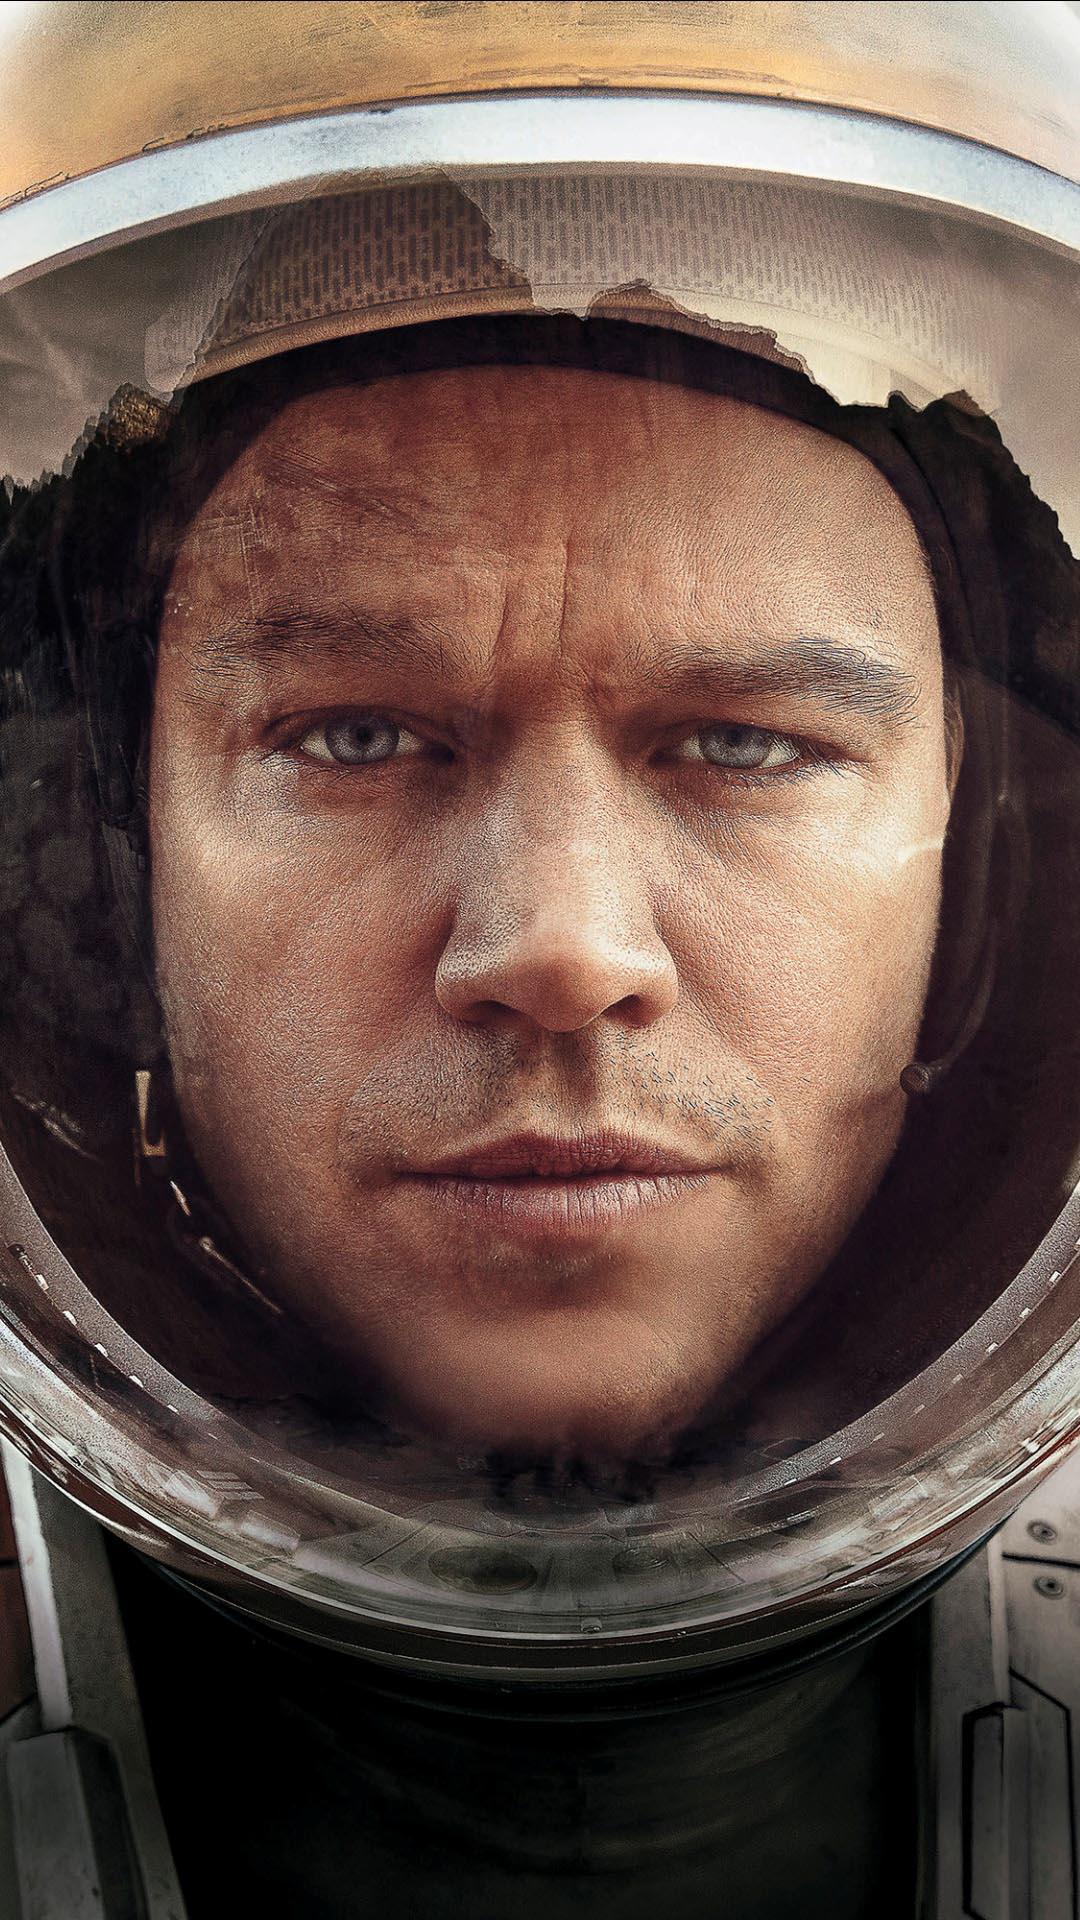 Matt Damon The Martian Helmet Android Wallpapers free download